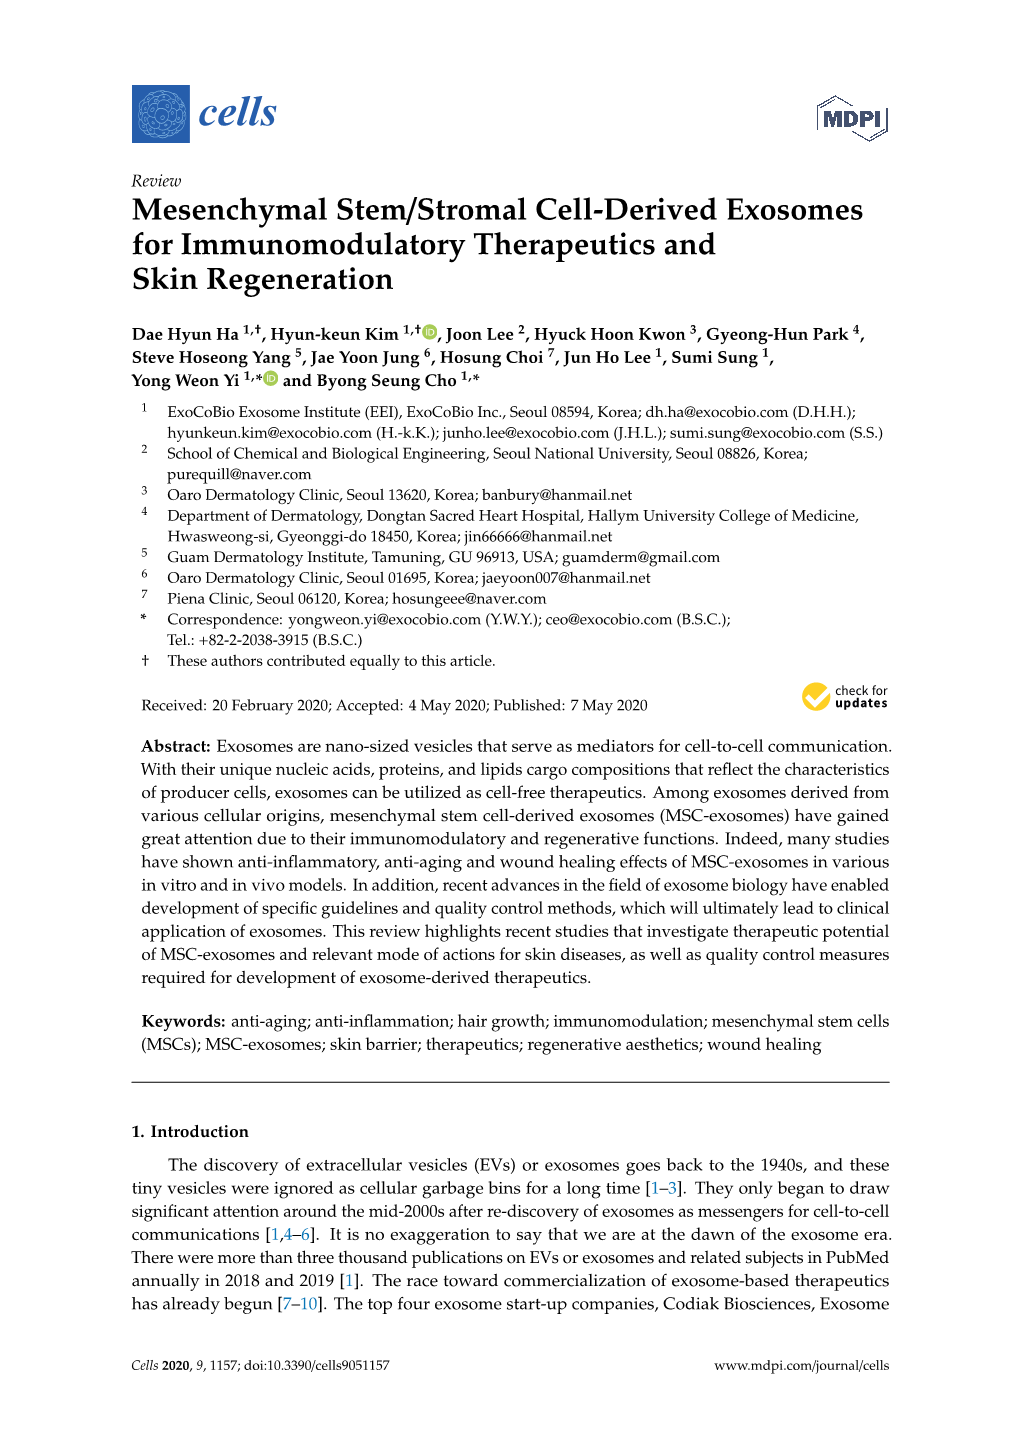 Mesenchymal Stem/Stromal Cell-Derived Exosomes for Immunomodulatory Therapeutics and Skin Regeneration